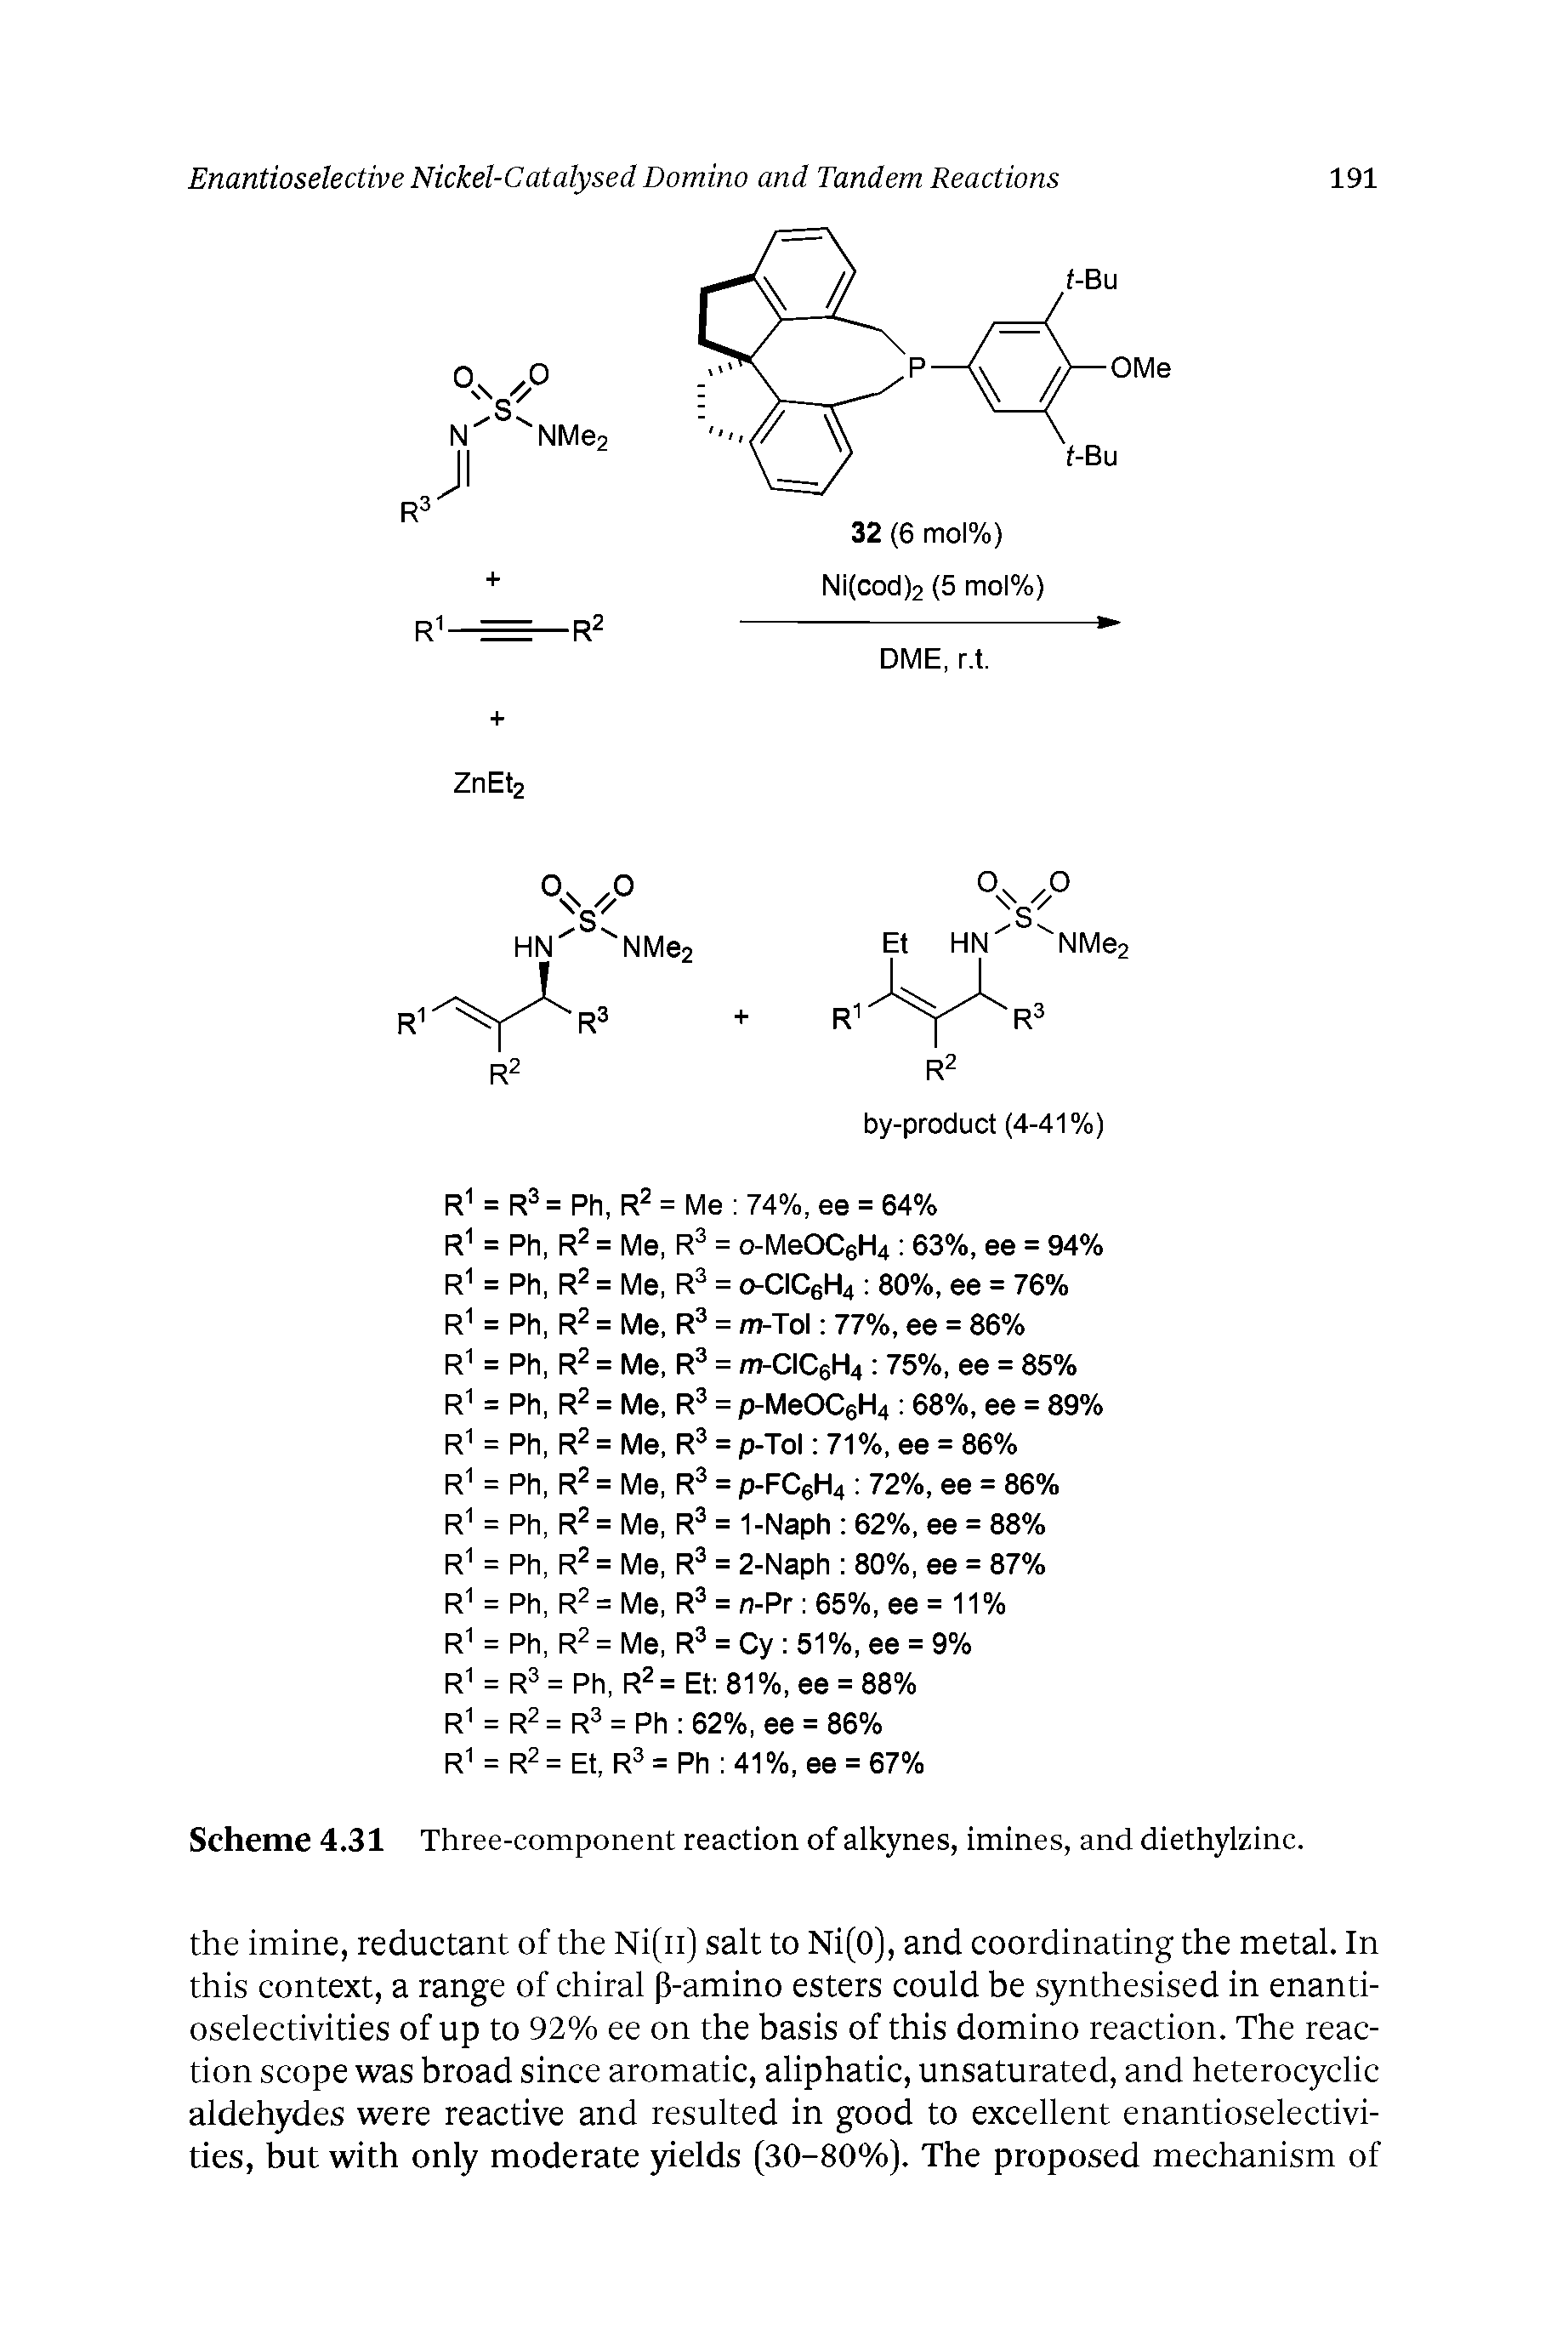 Scheme 4.31 Three-component reaction of alkynes, imines, and diethylzinc.